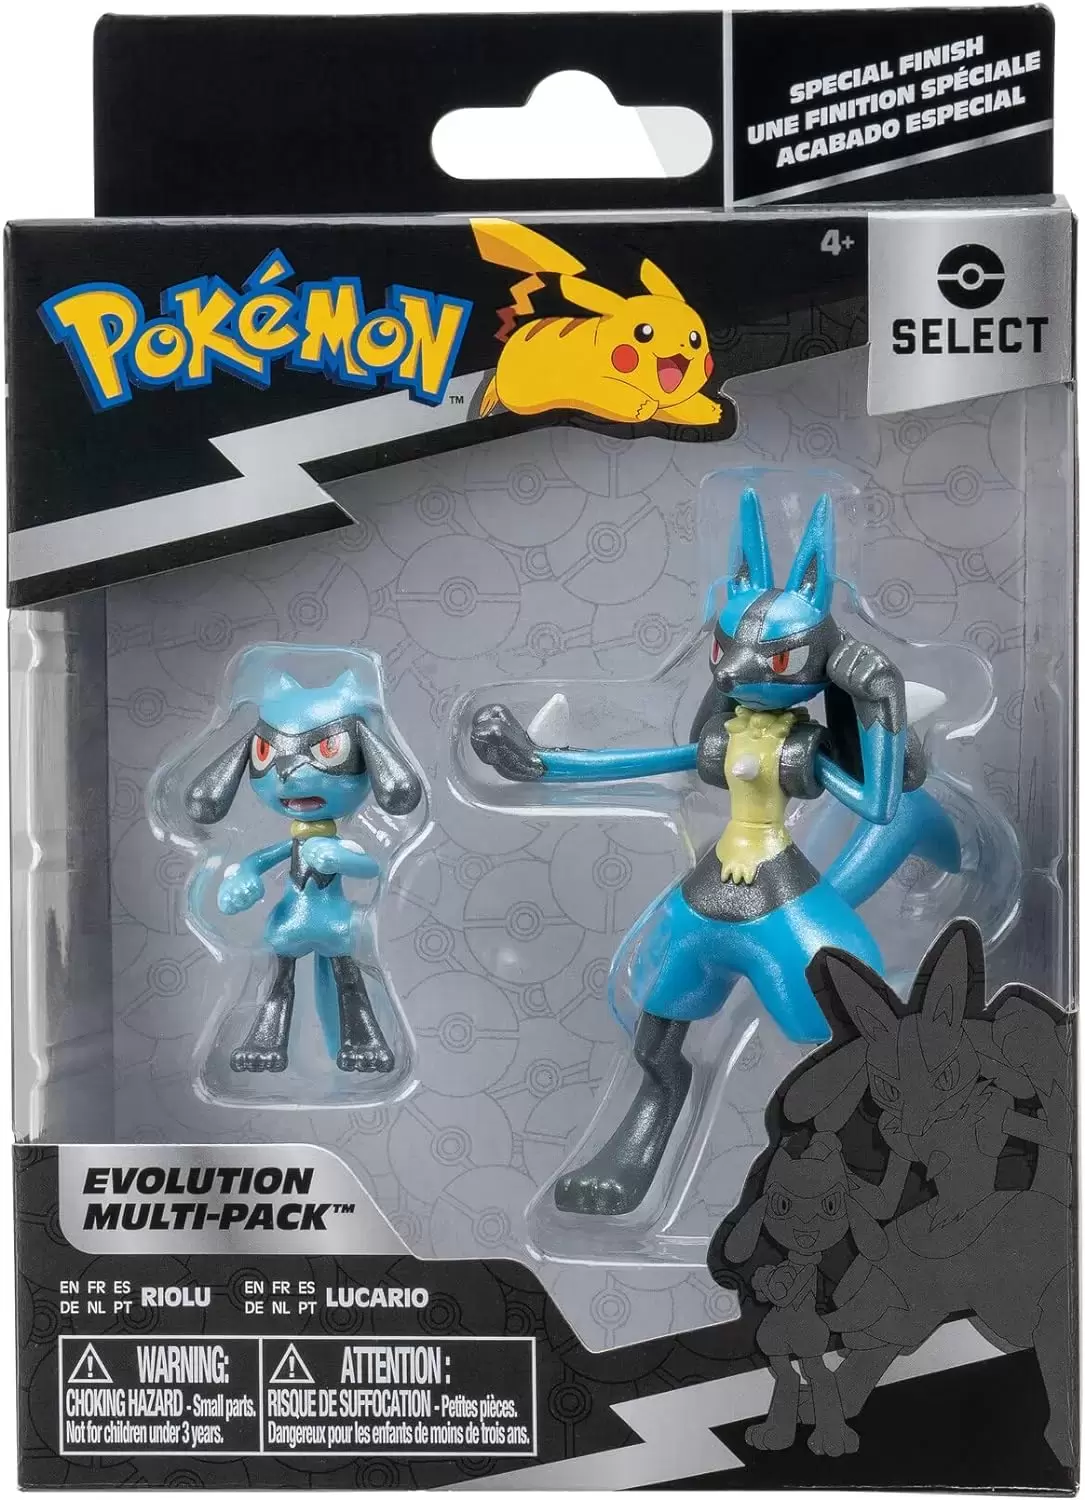 Pokémon Action Figures - Pokemon Select - Riolu & Lucario Evolution Multi-Pack